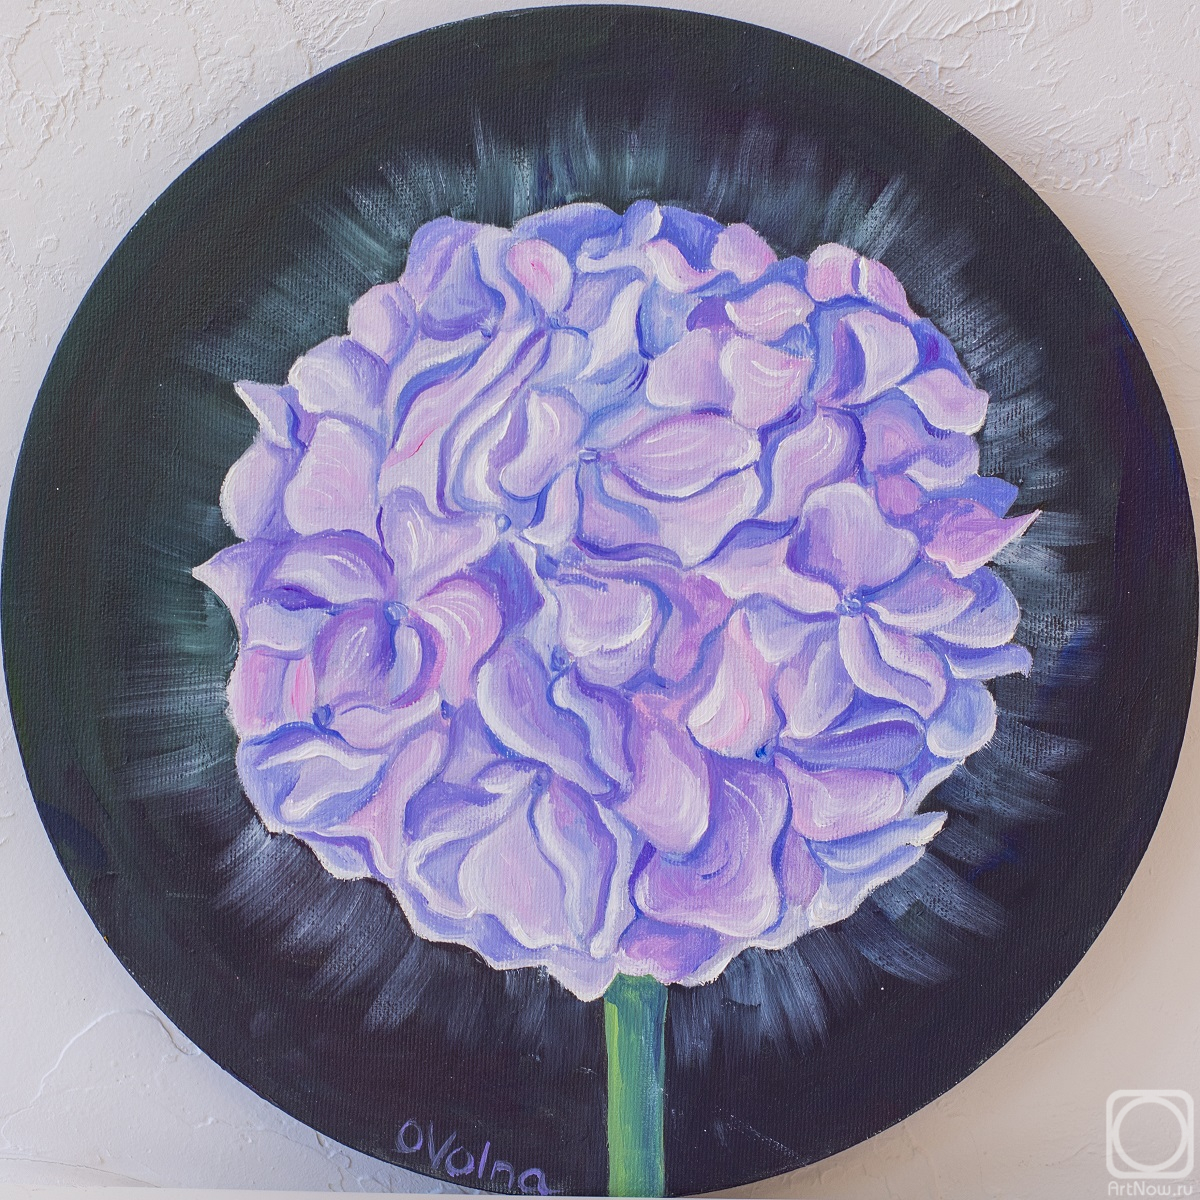 Volna Olga. Round purple hyacinth